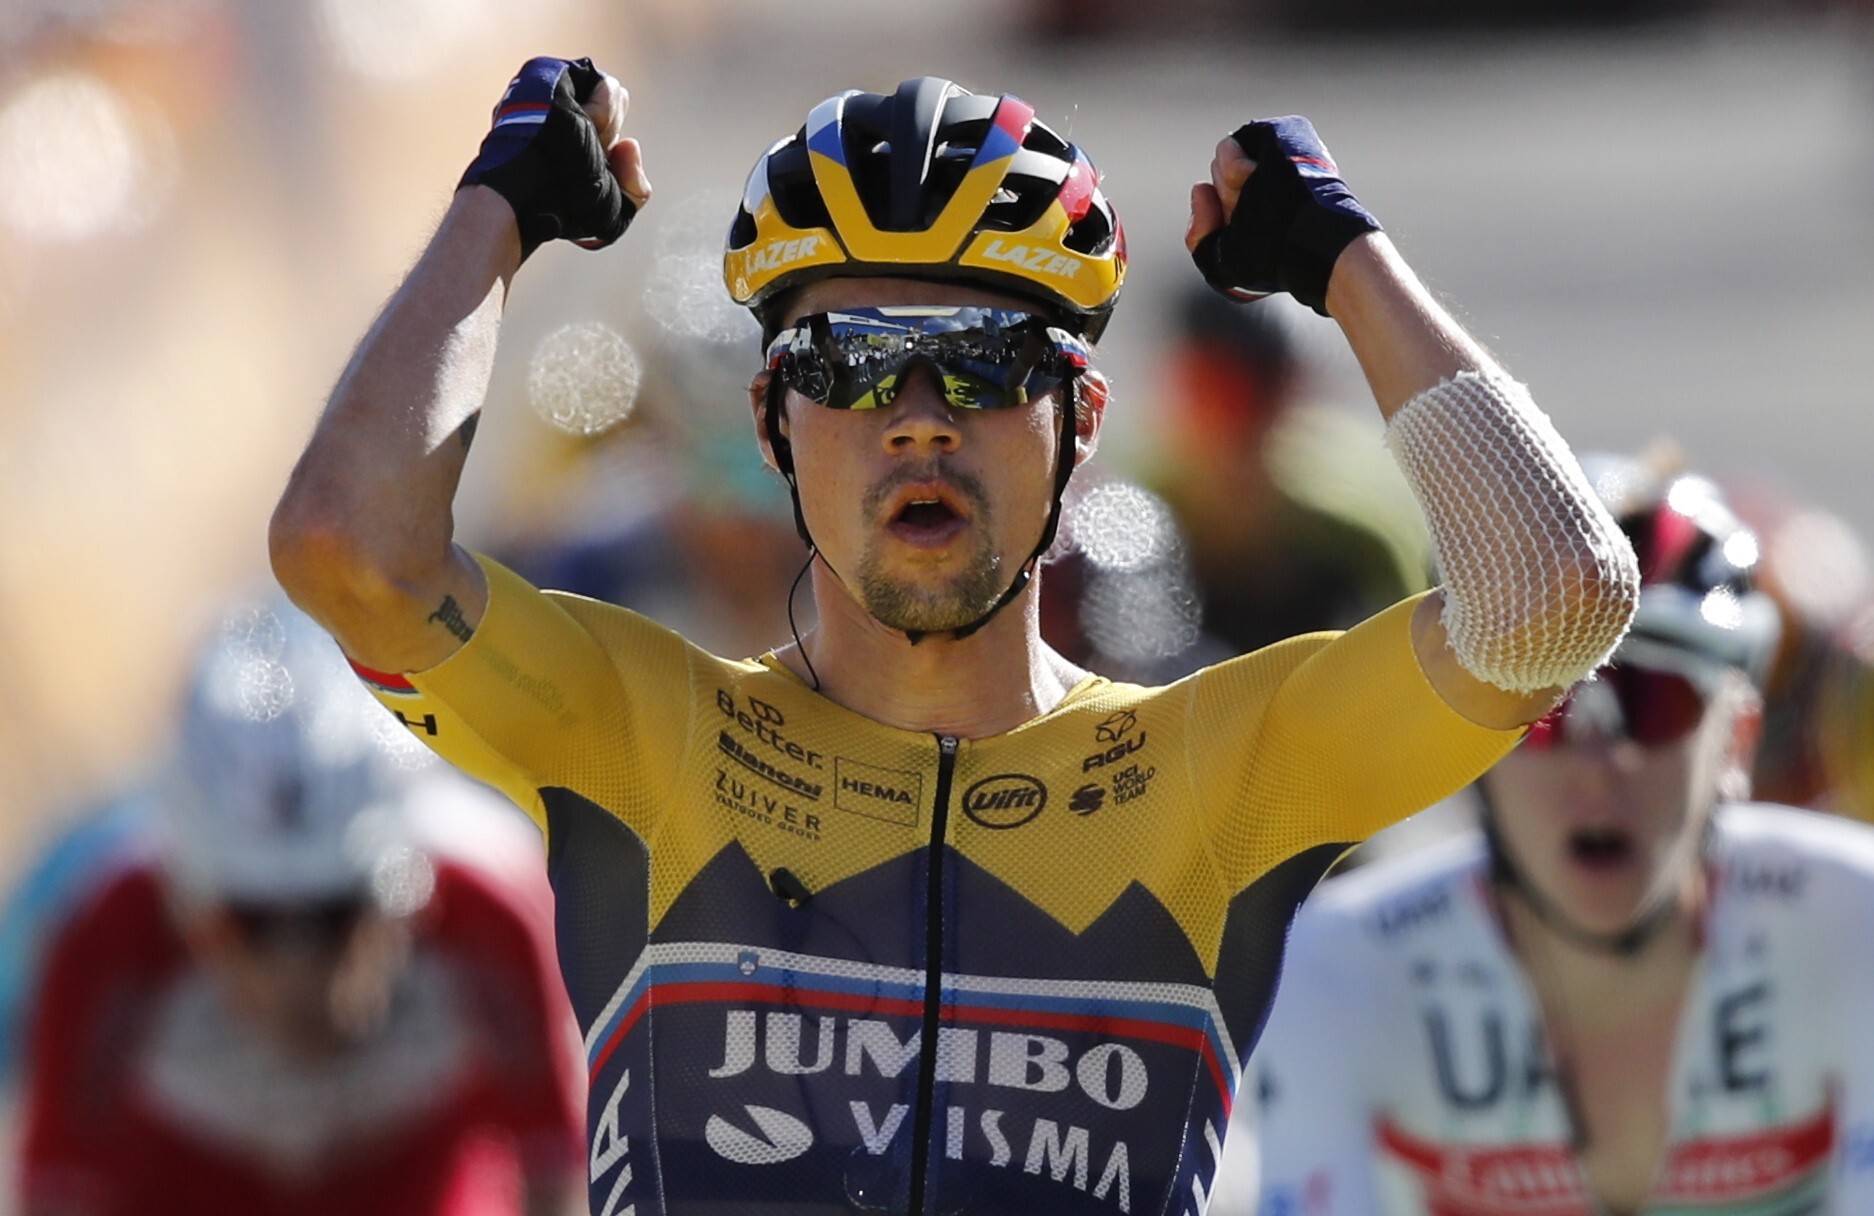 Slovenian rider Primoz Roglic of Jumbo-Visma team celebrates winning the fourth stage of the Tour de France. Photo: EPA